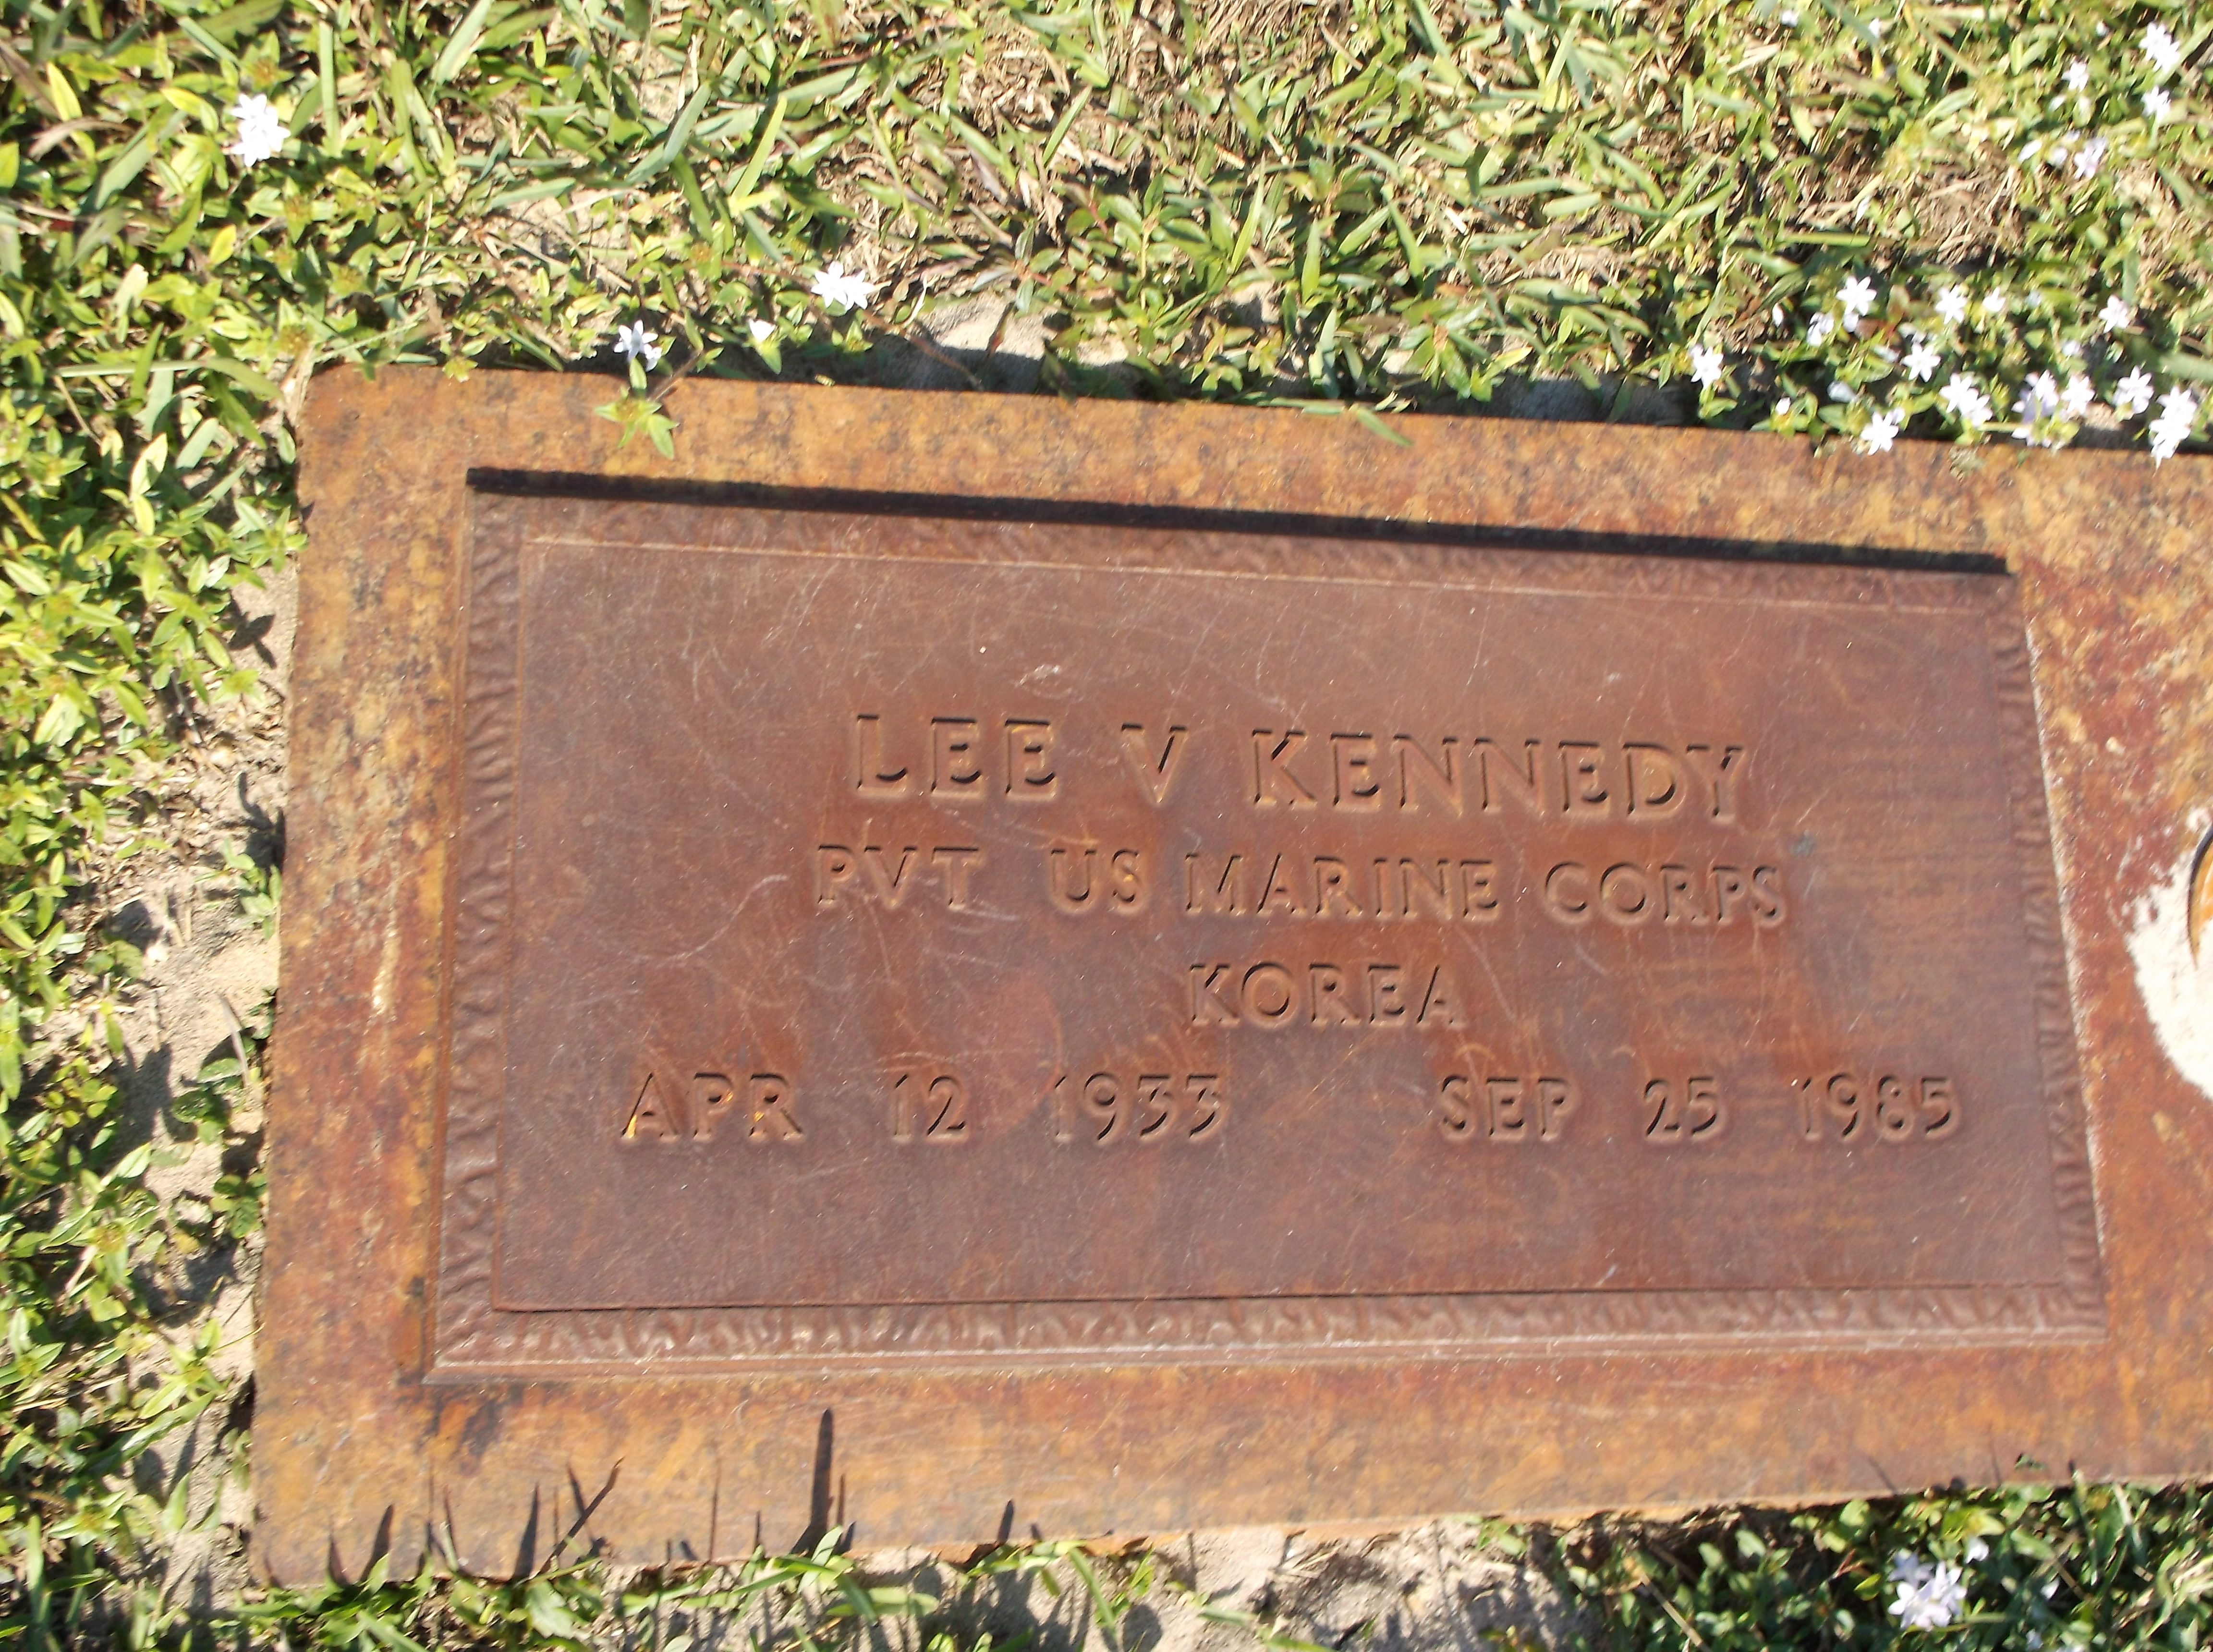 Lee V Kennedy